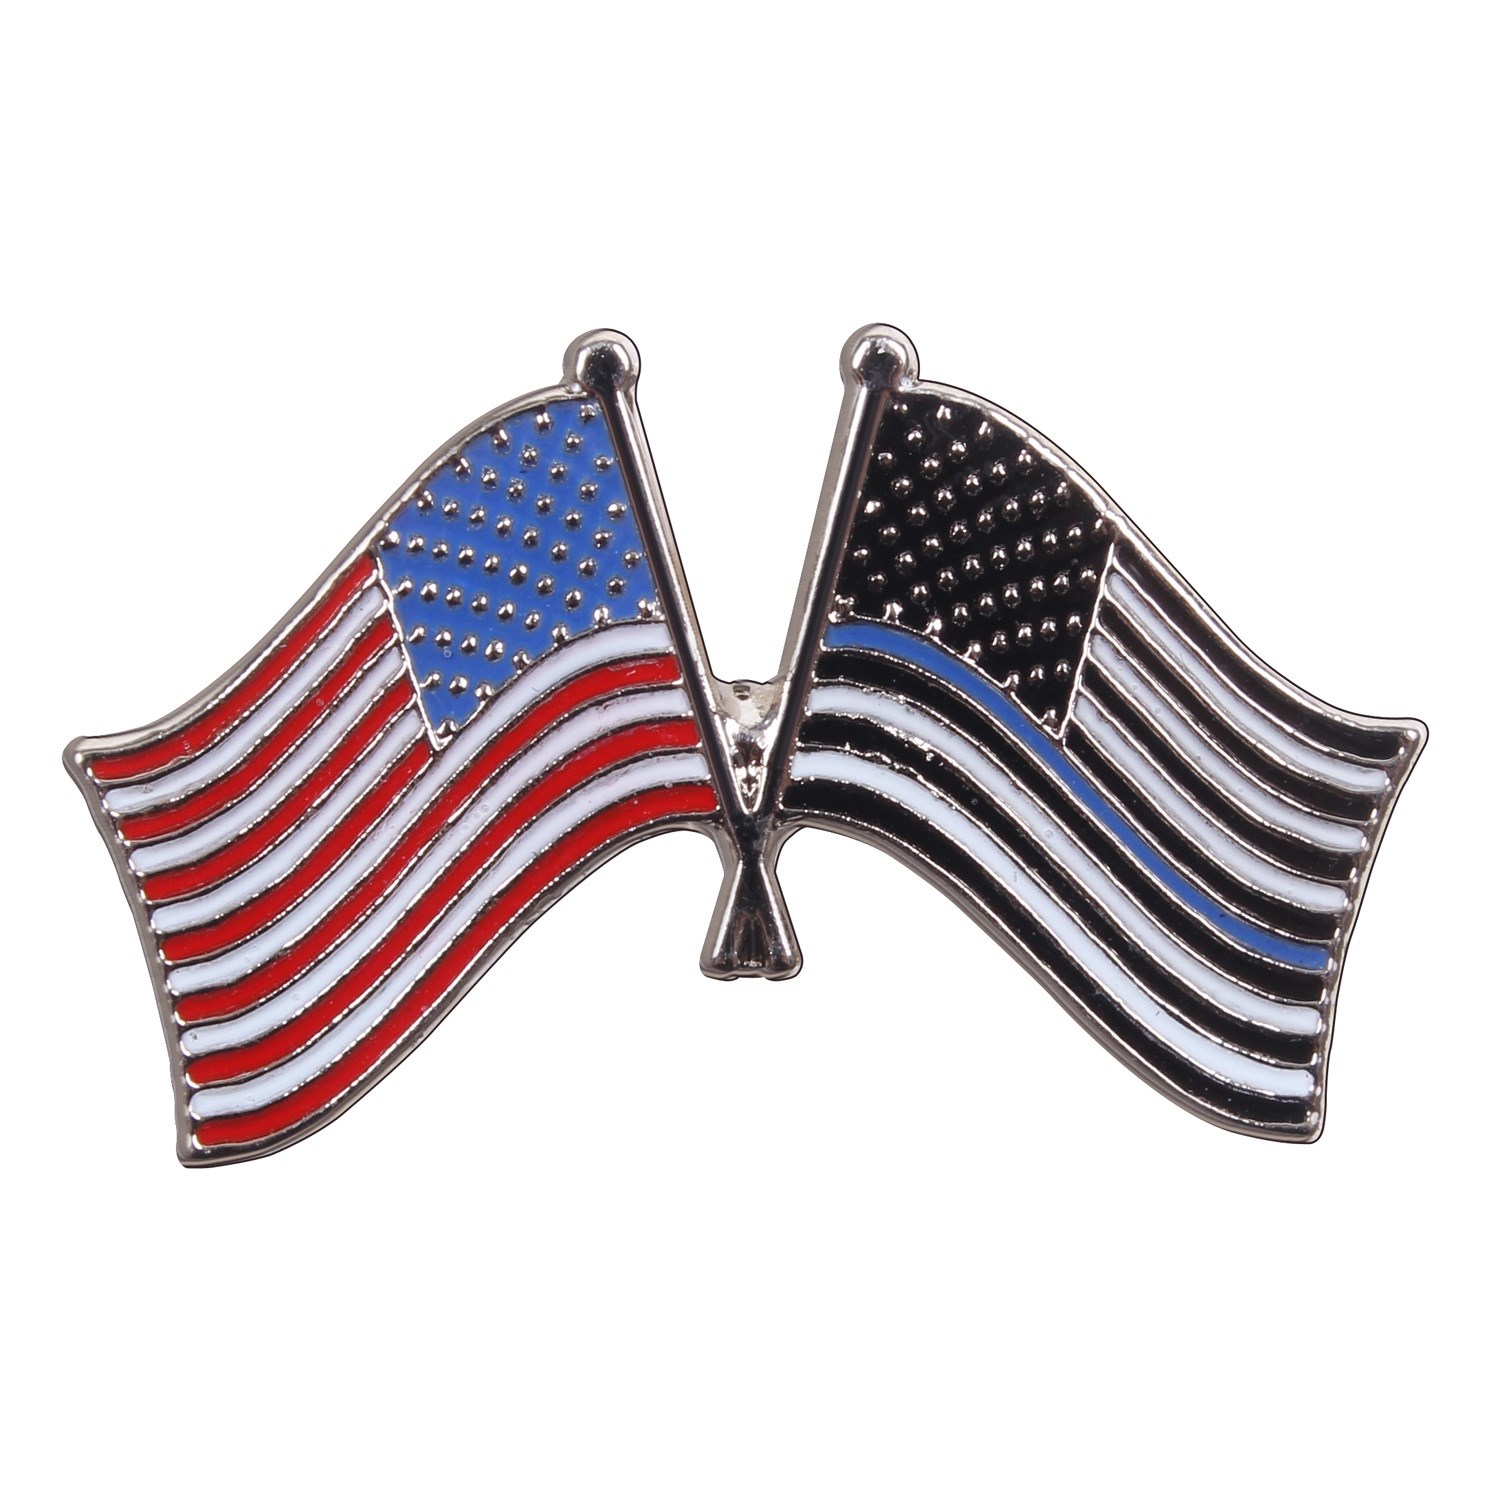 Odznak vlajka USA farebná a s modrou linkou